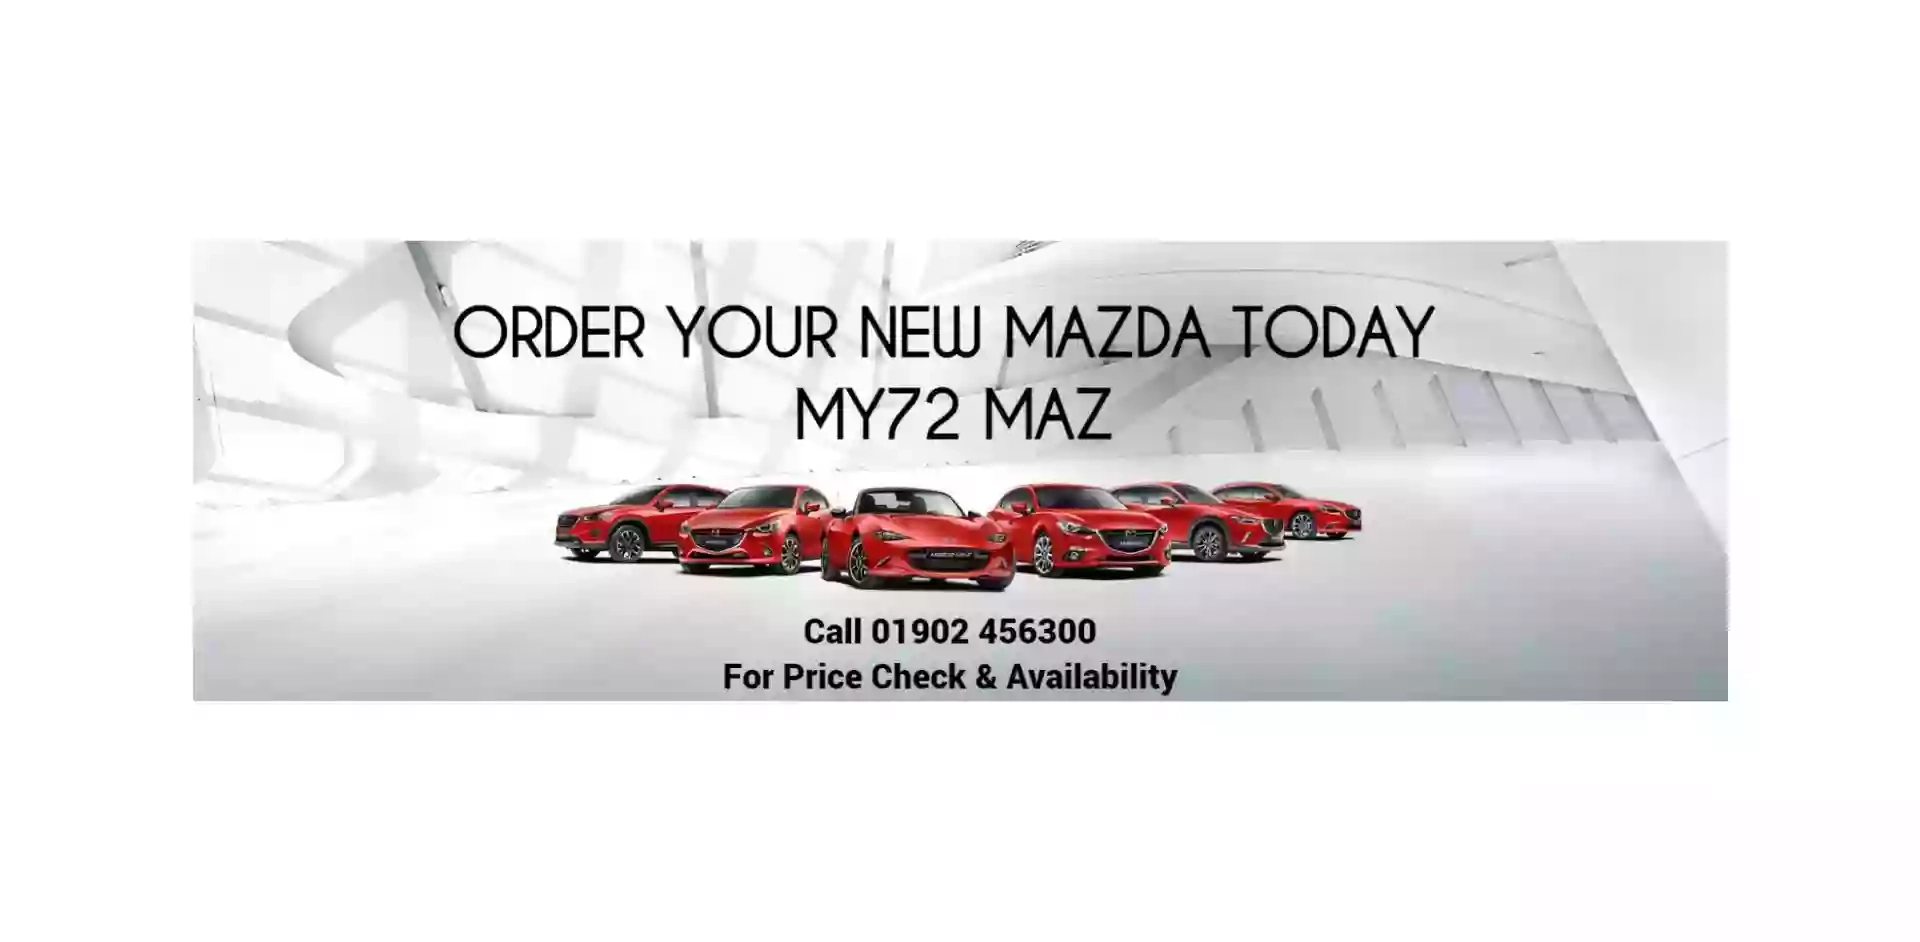 Mazcare Ltd